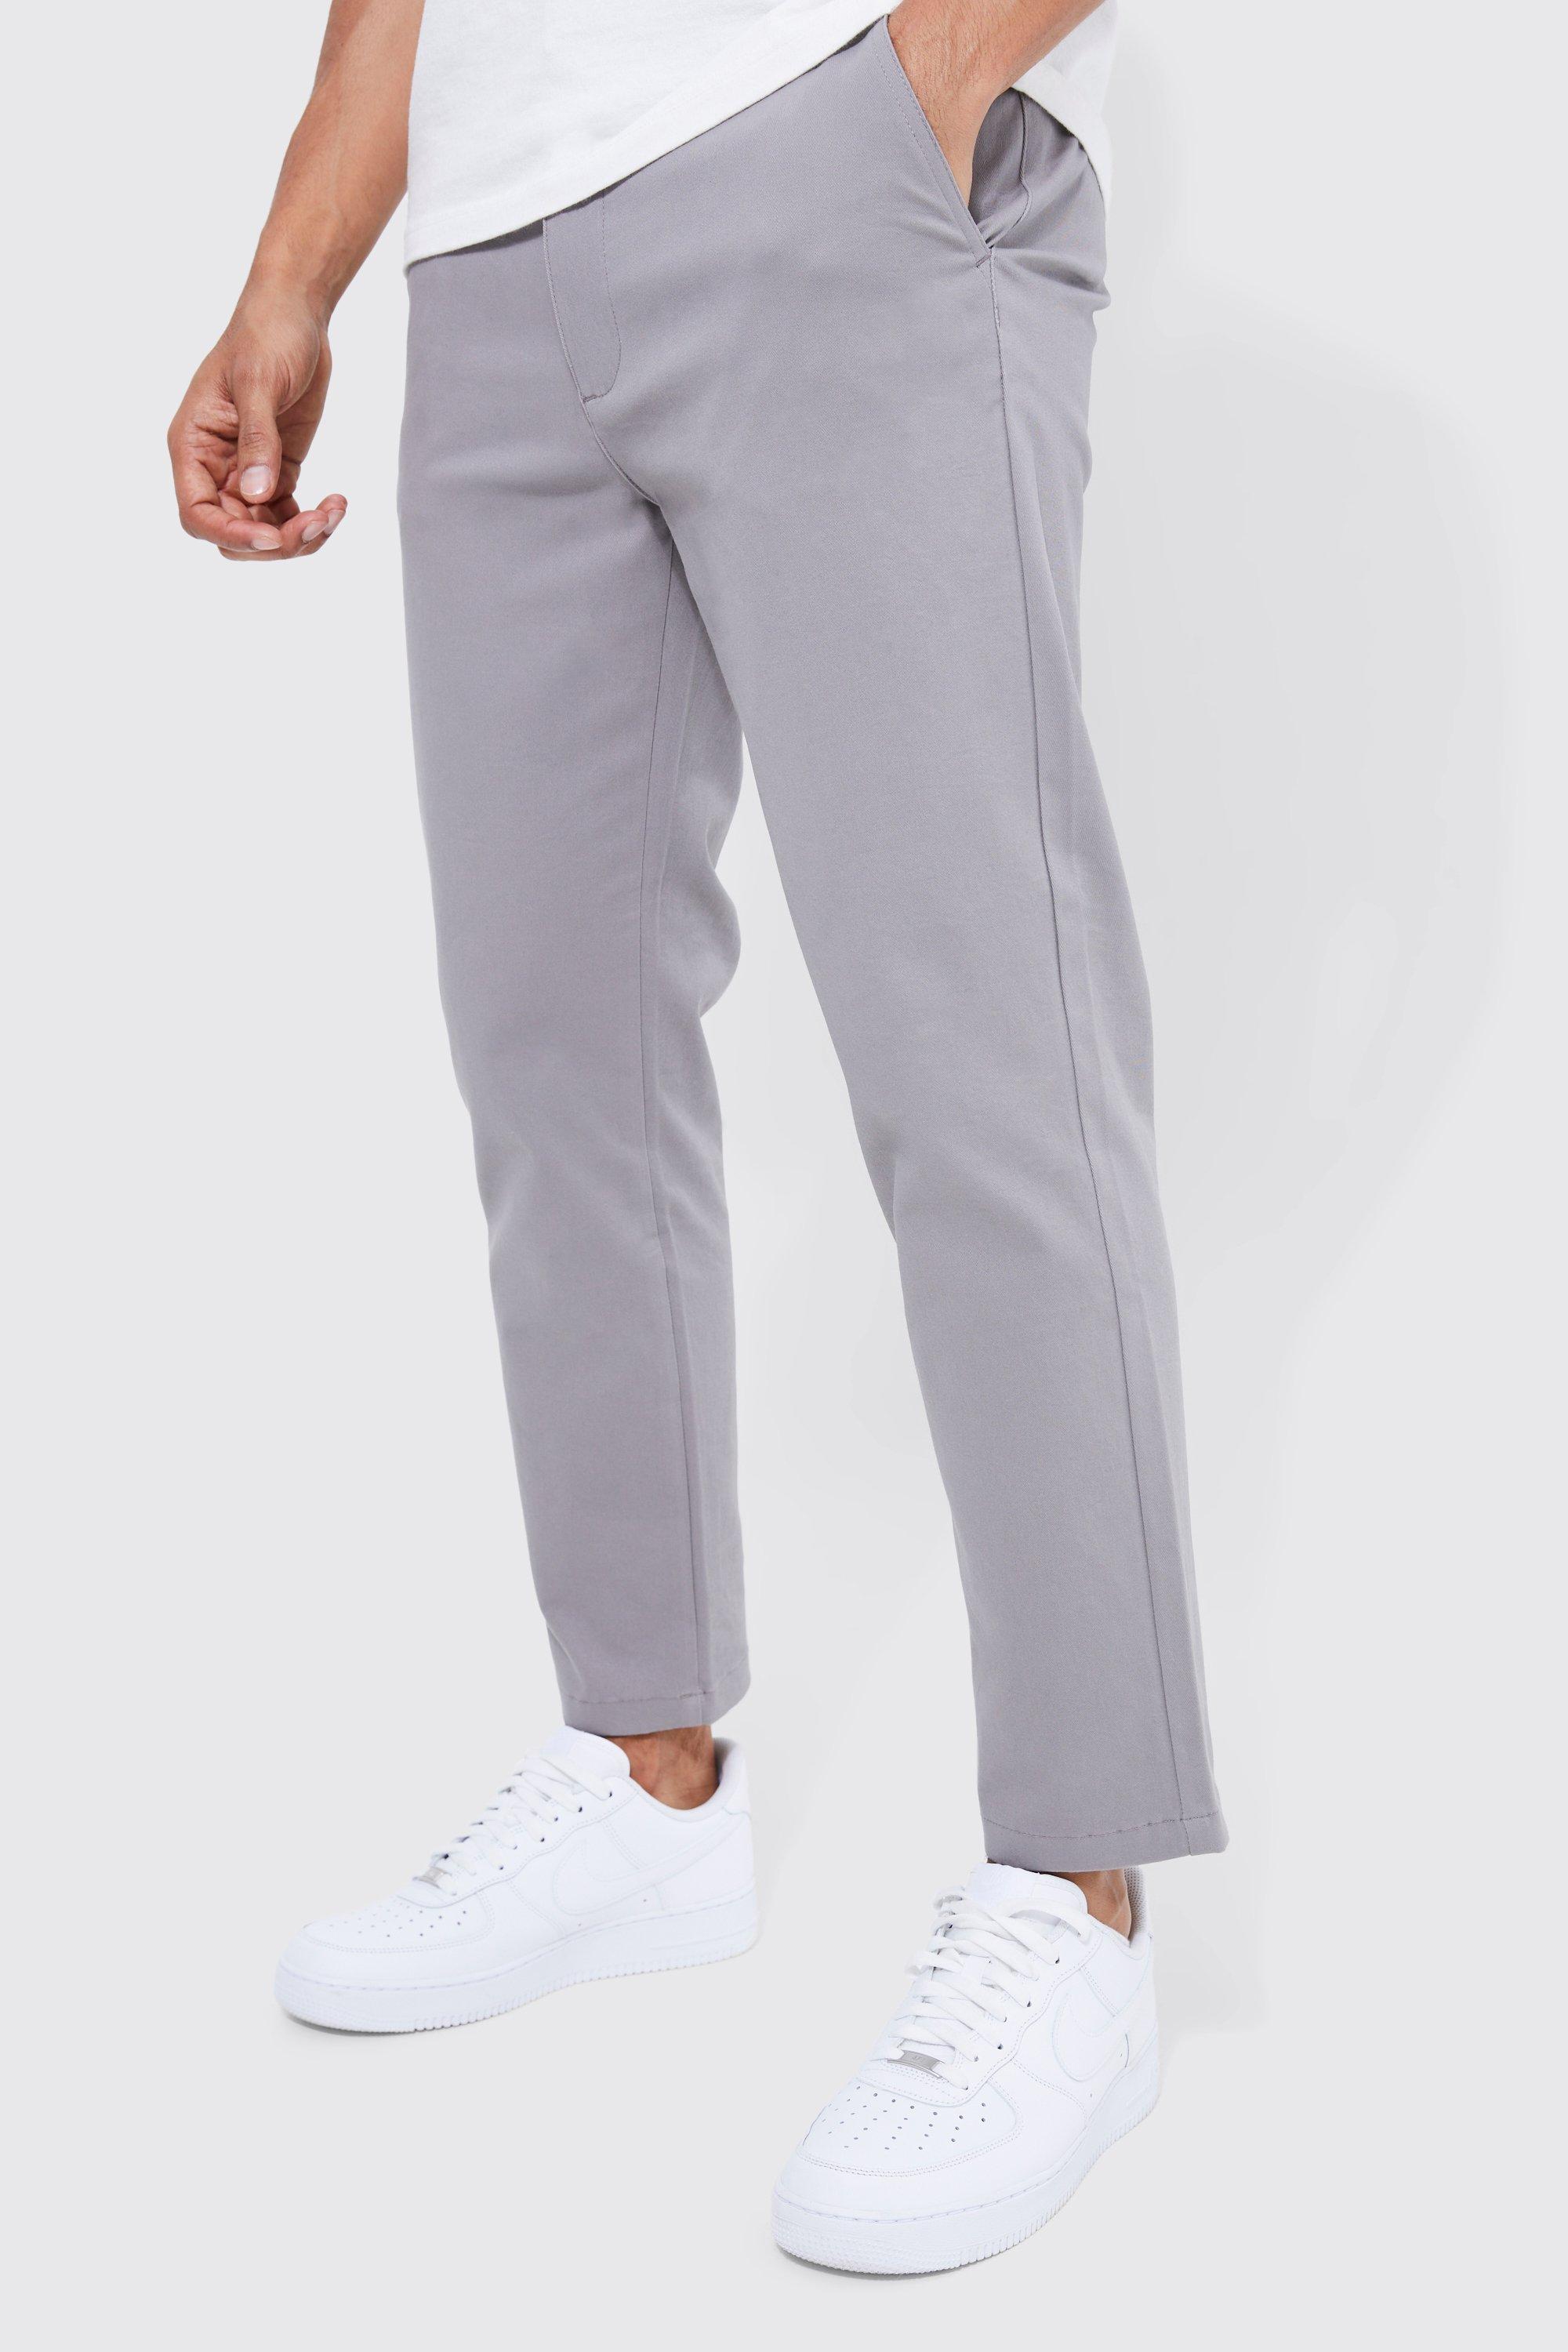 pantalon chino slim court homme - gris - 36r, gris